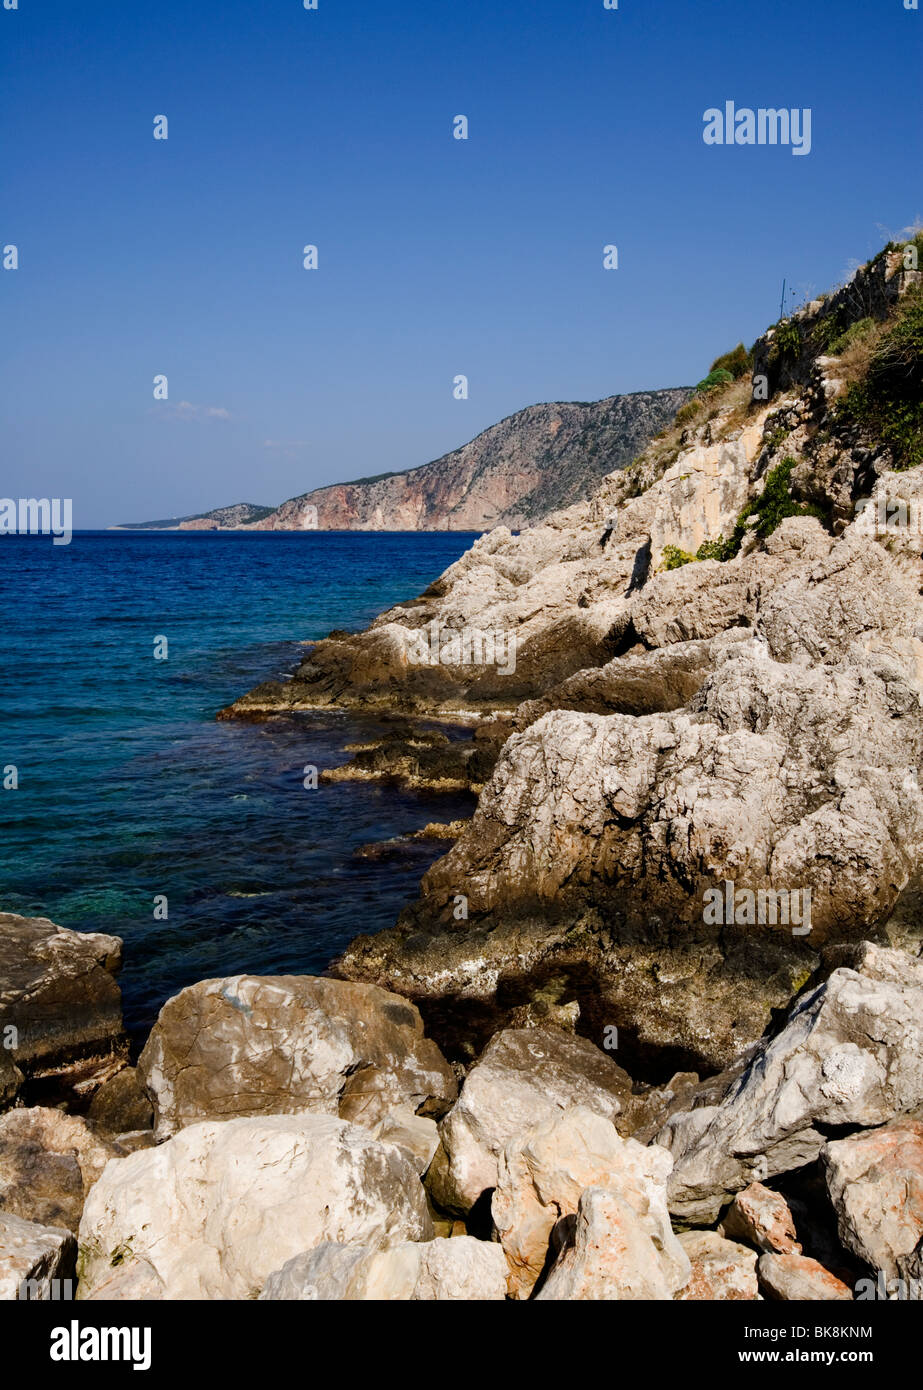 Assos, Kefalonia - one of the prettiest coastal areas in Greece Stock Photo